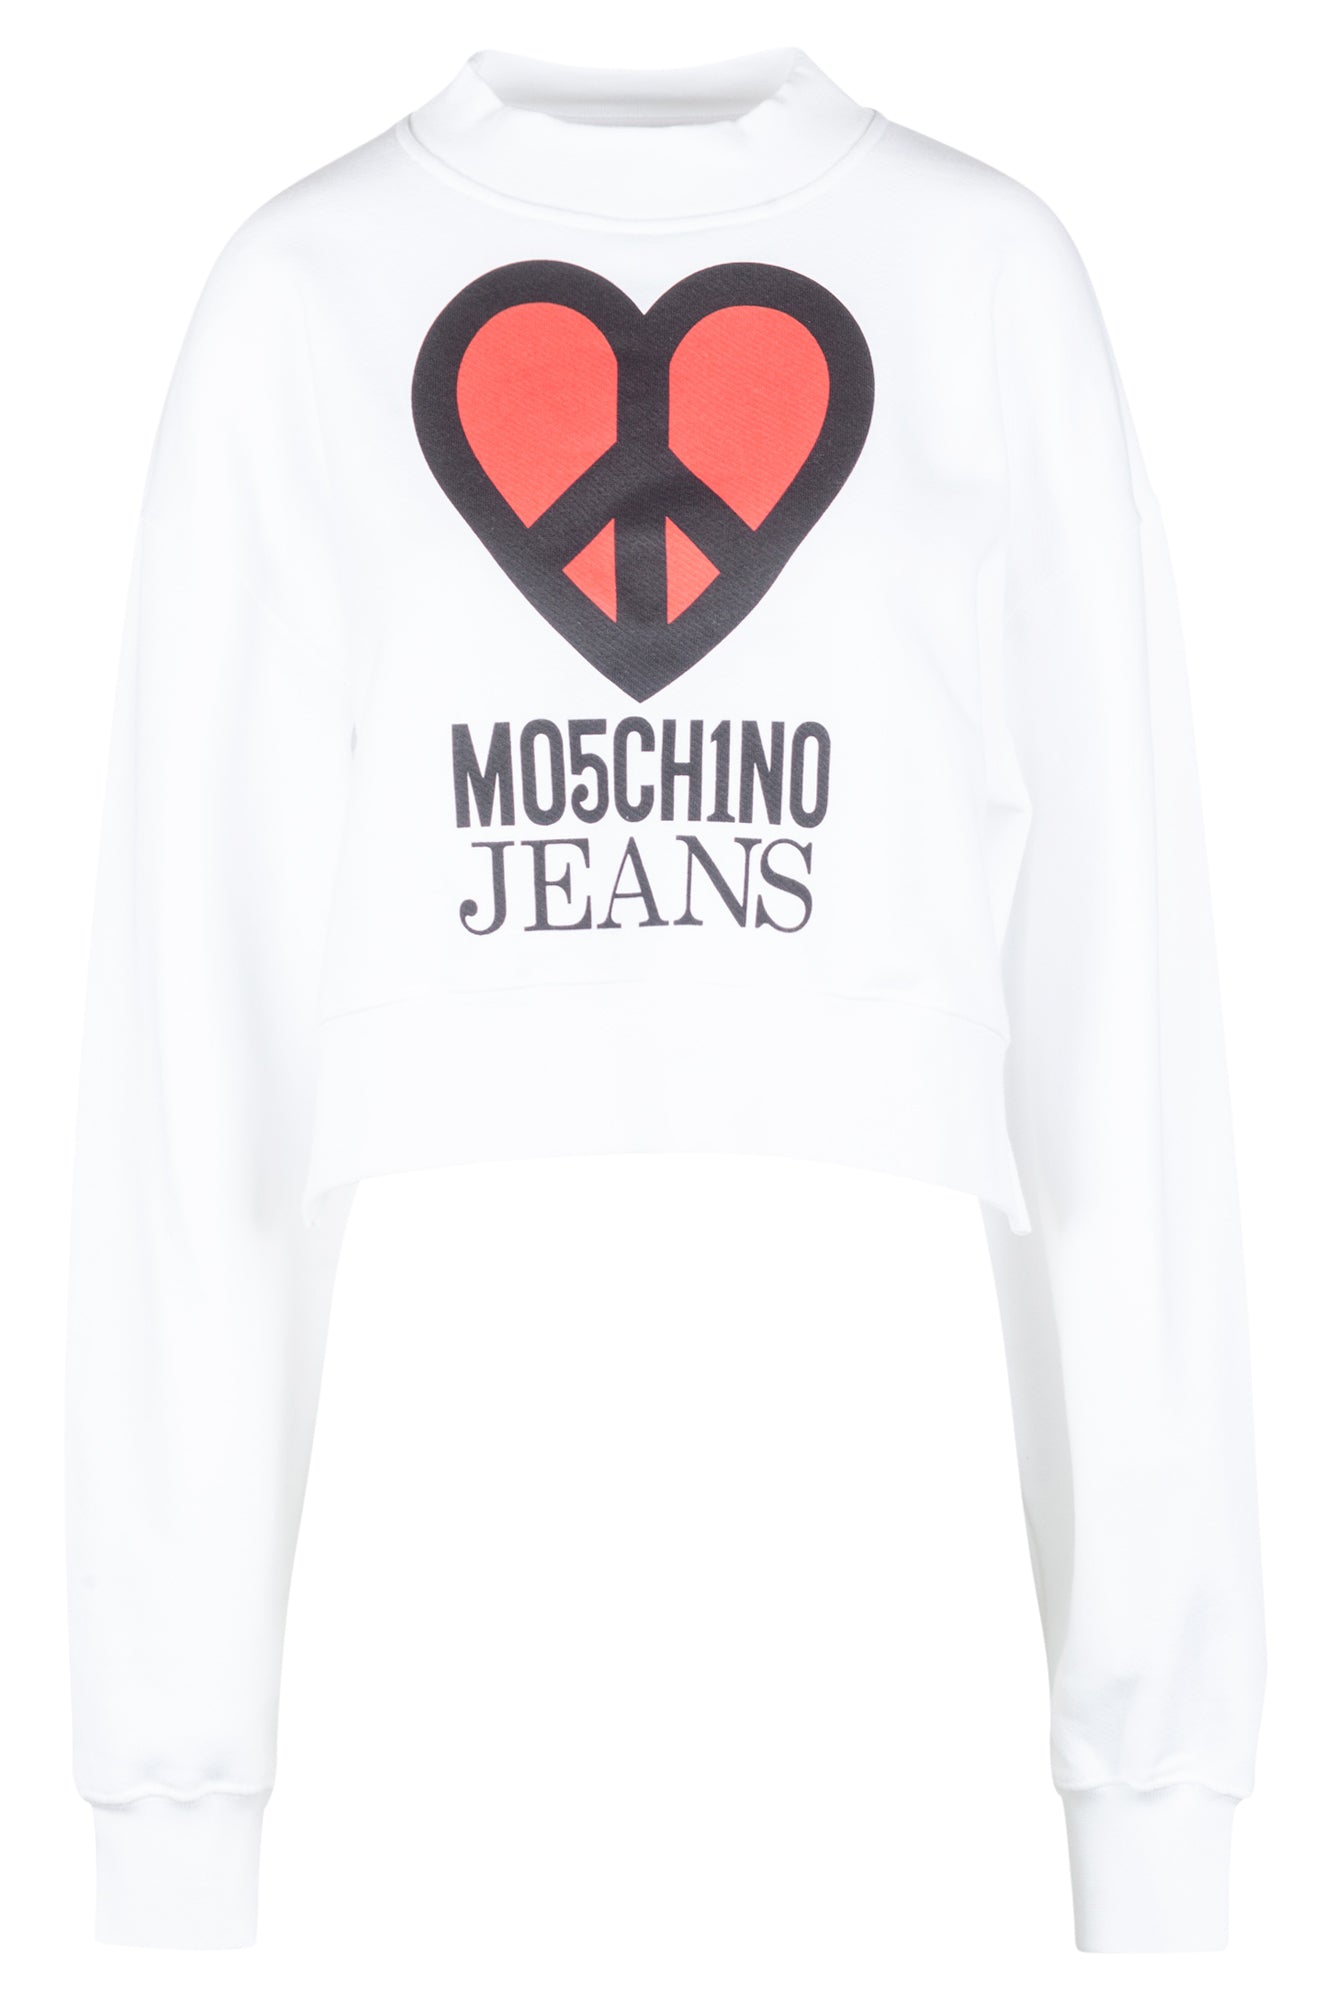 MO5CH1NO JEANS - Moschino - Felpa crop - 430119 - Bianco